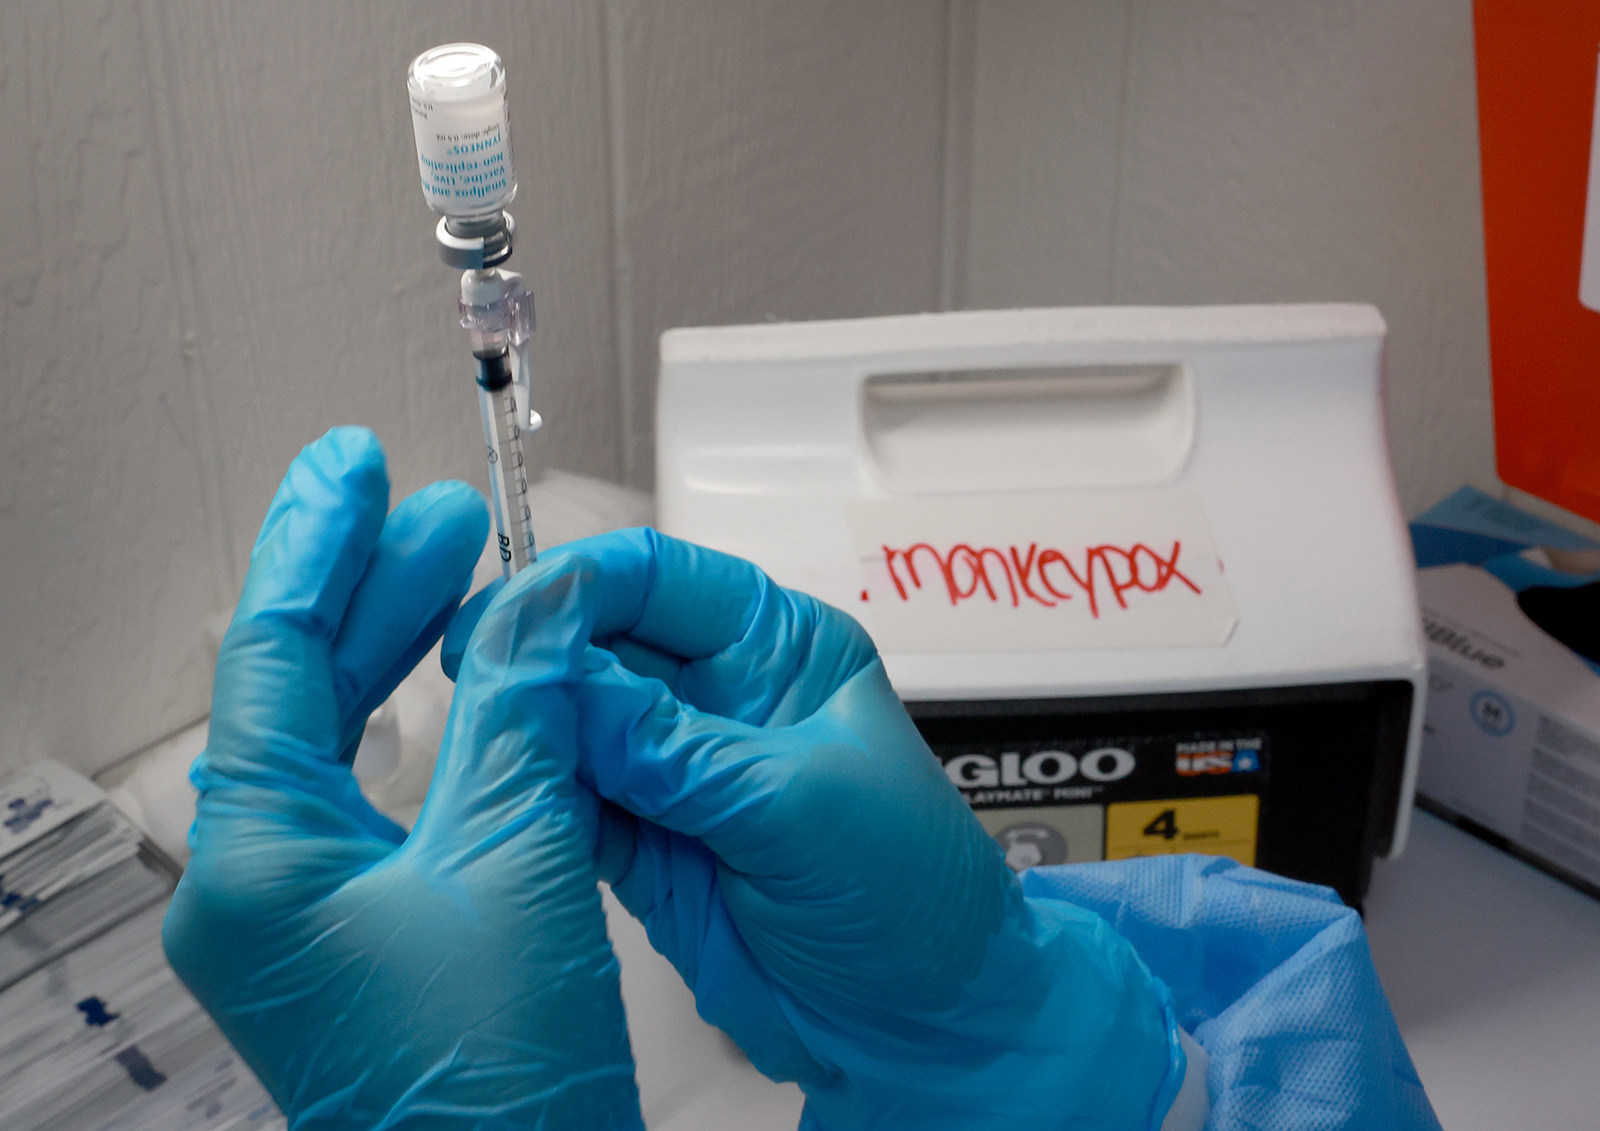 A monkeypox vaccine is prepared. Photo: TNS